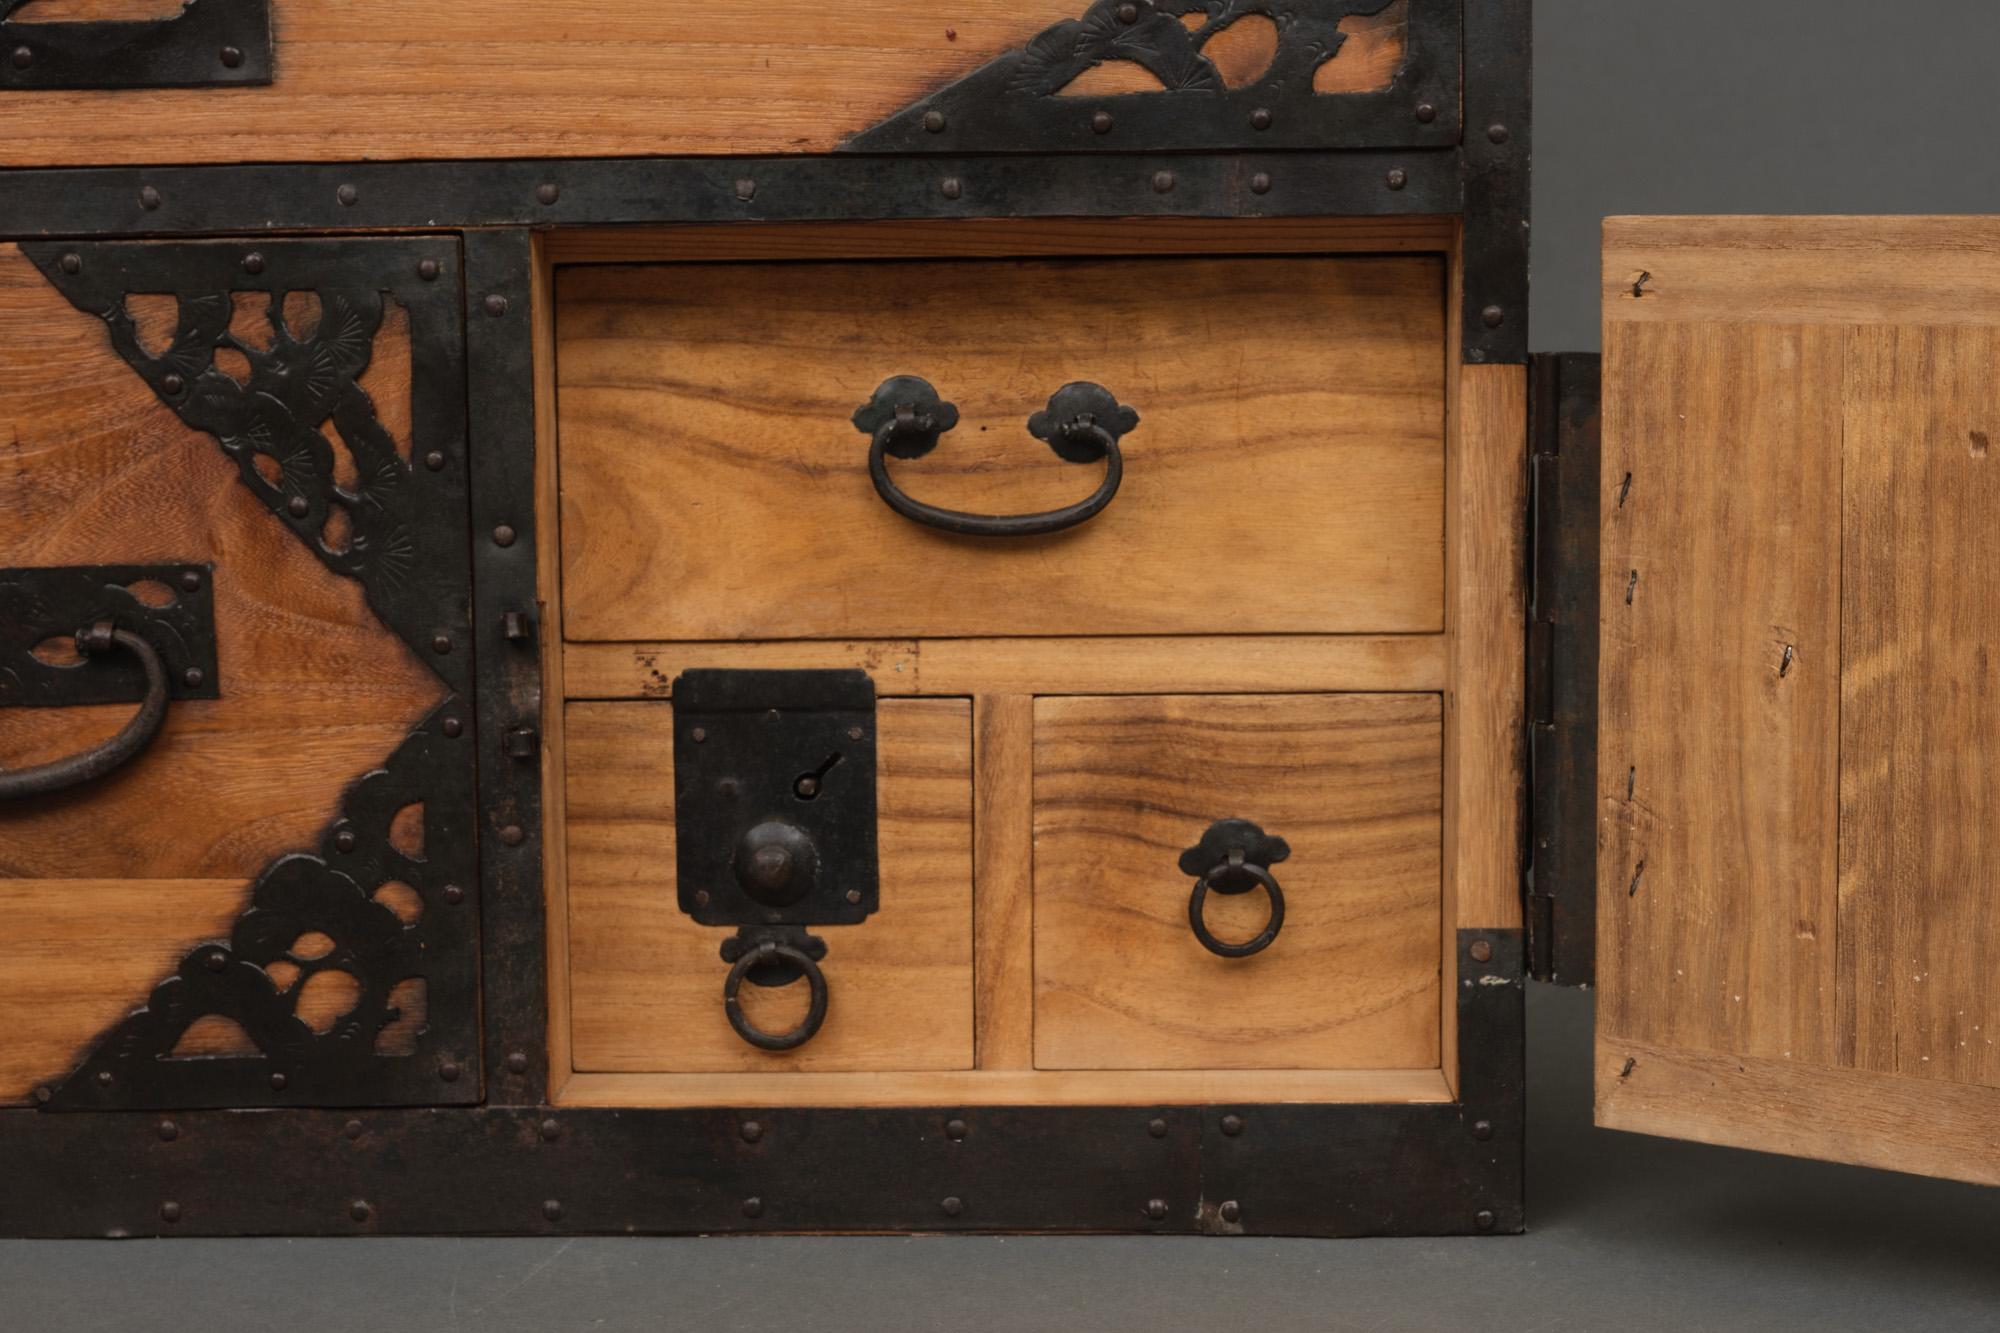 19th Century Japanese Sado ishô dansu 衣装箪笥 (cabinet of drawers) with elaborate hardware